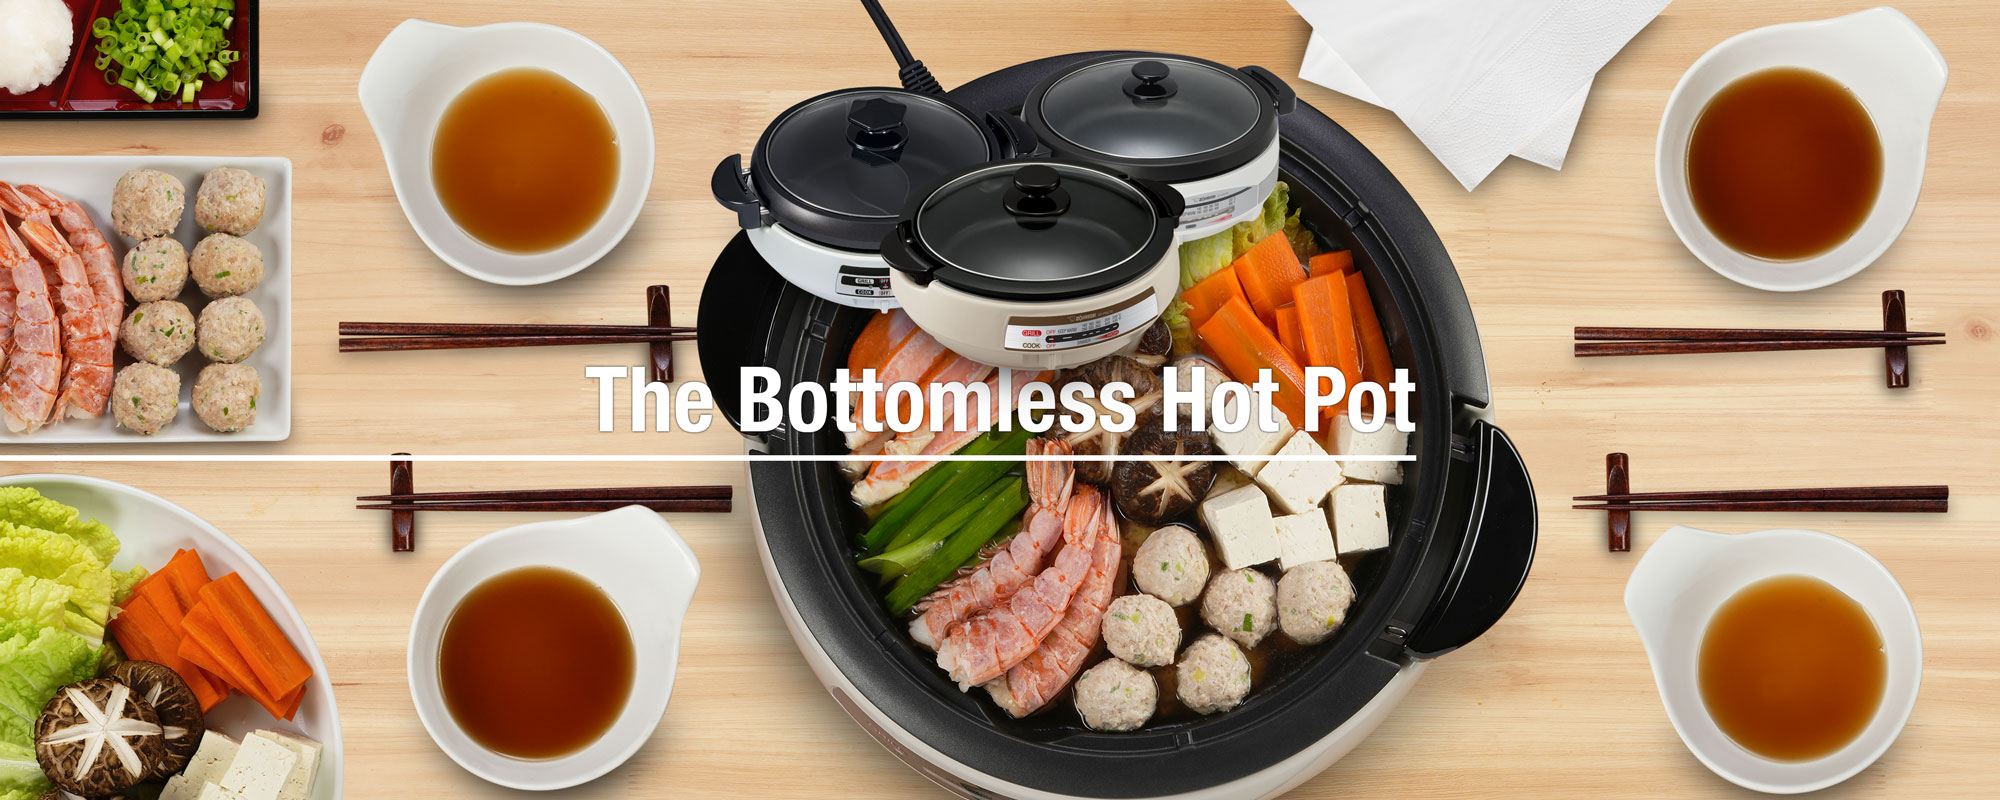 The bottomless hot pot